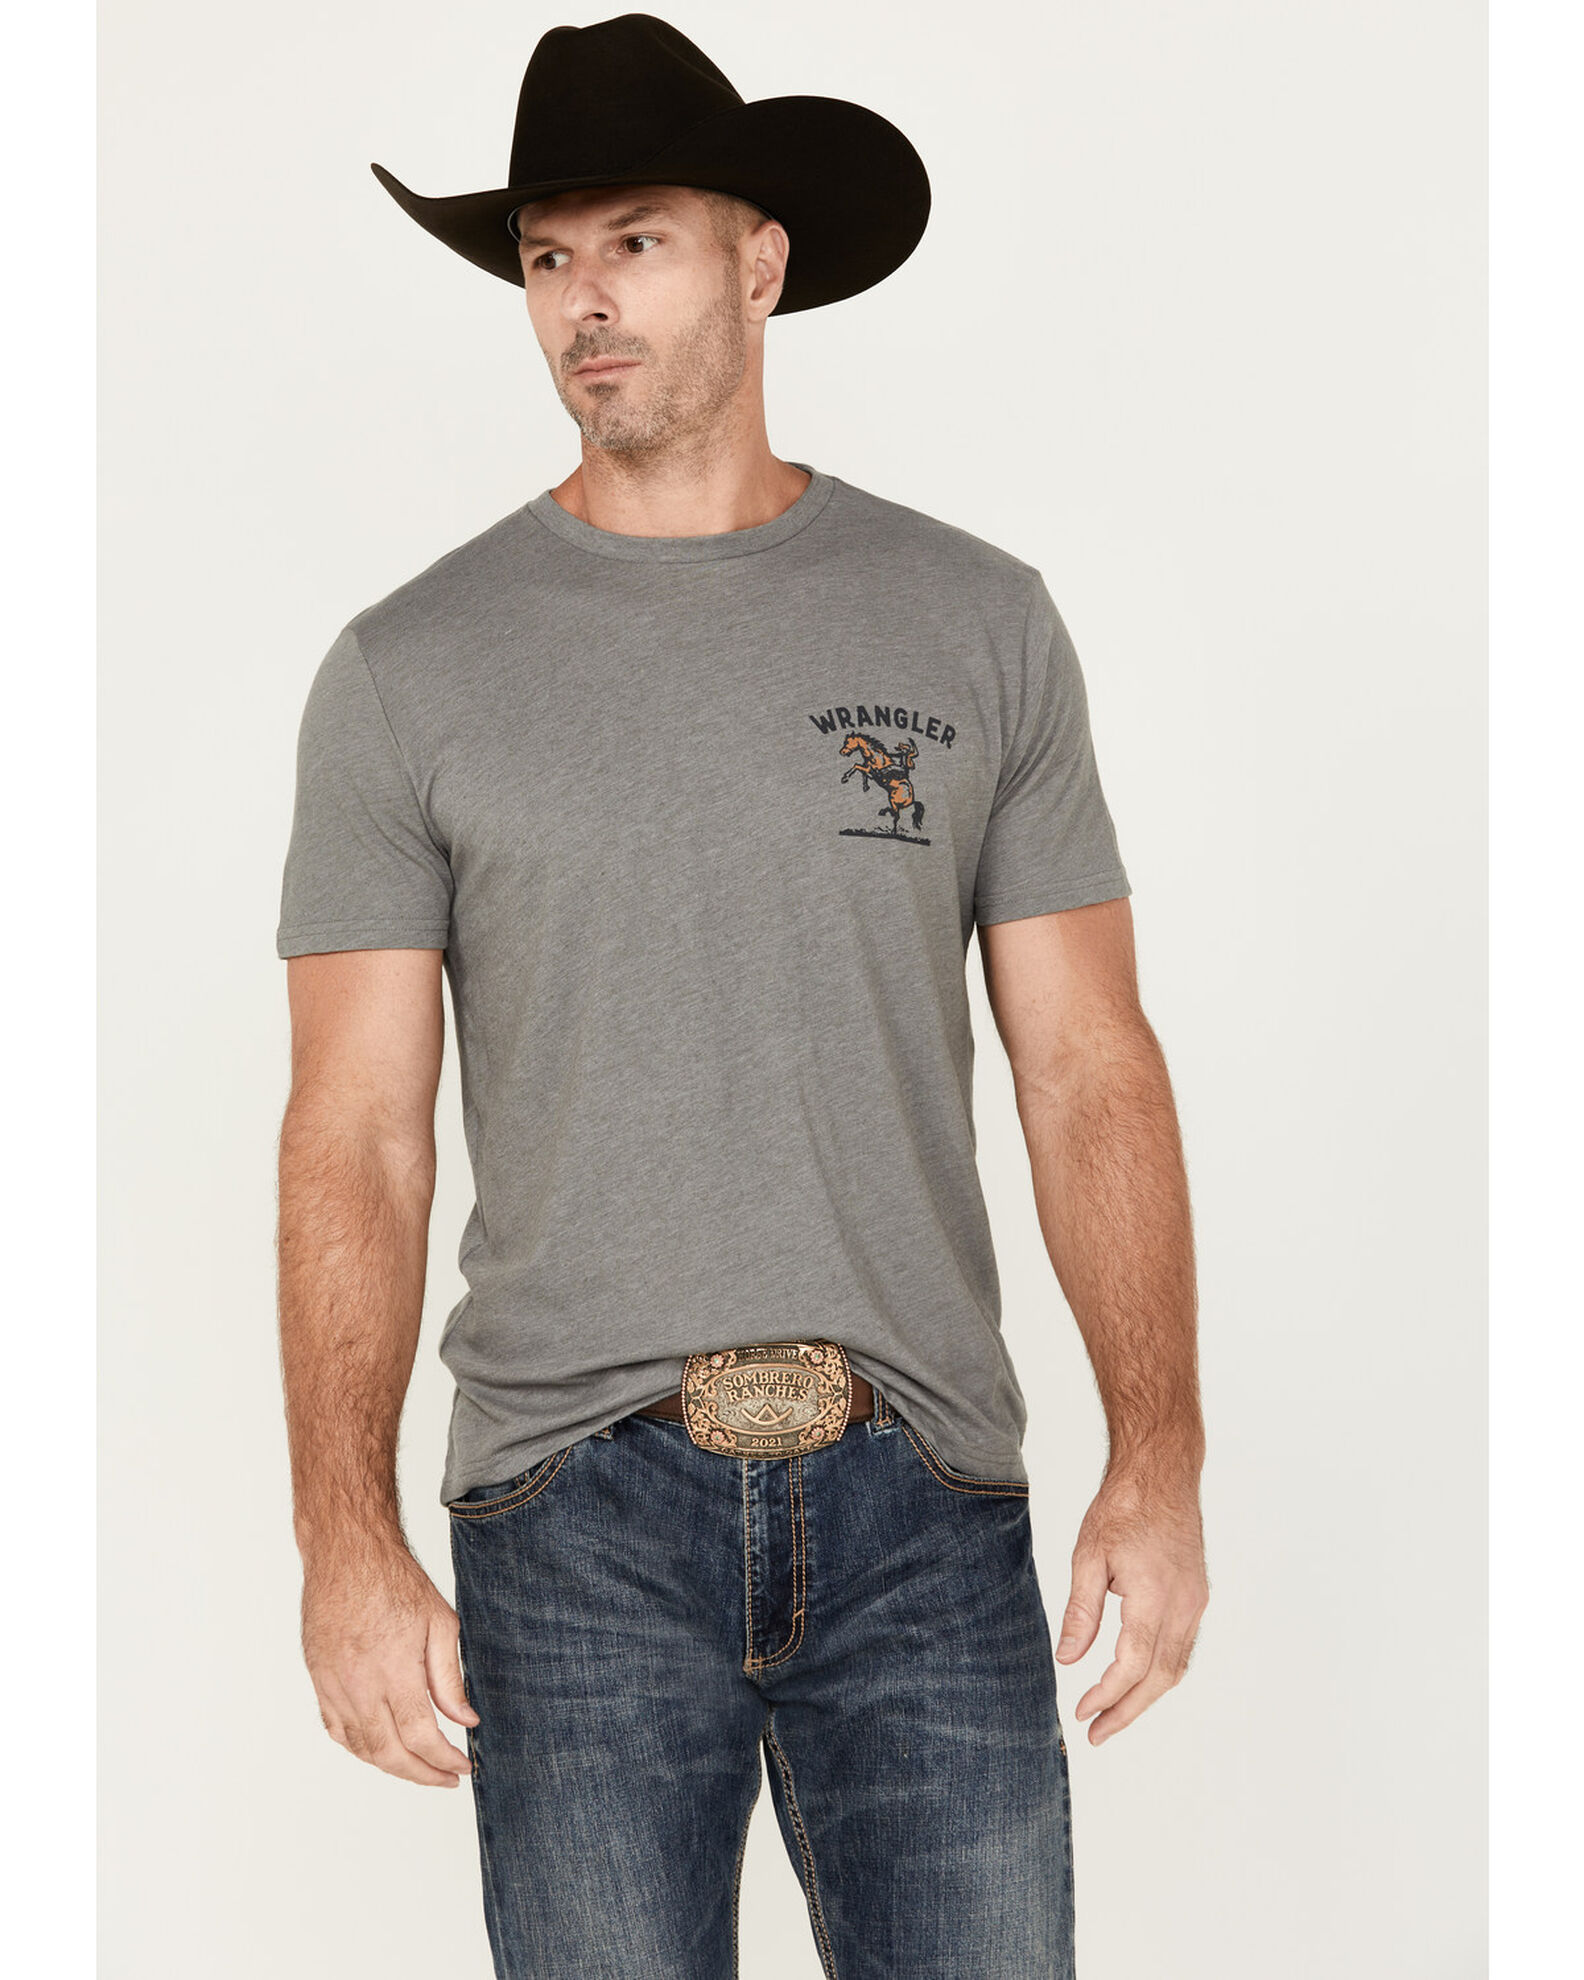 Wrangler Men's Cowboy Logo Short Sleeve Graphic T-Shirt